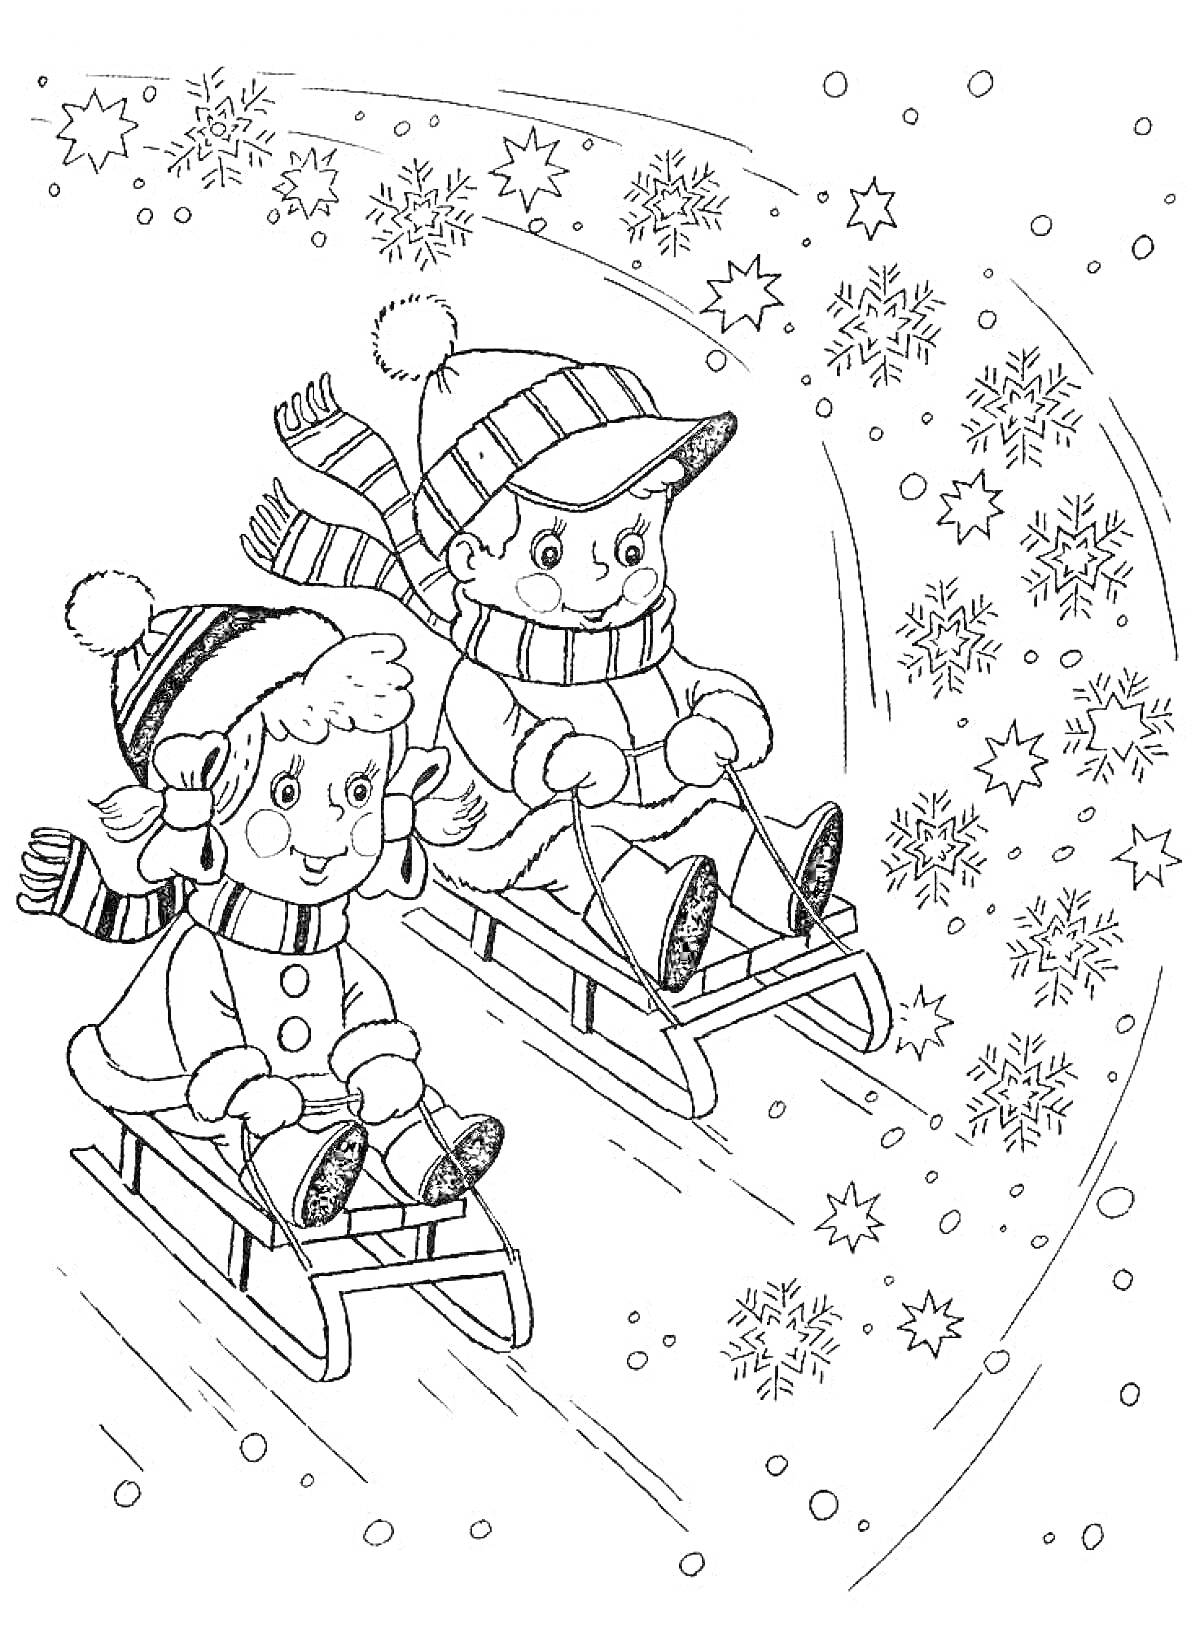 Дети на санках среди падающих звезд и снежинок